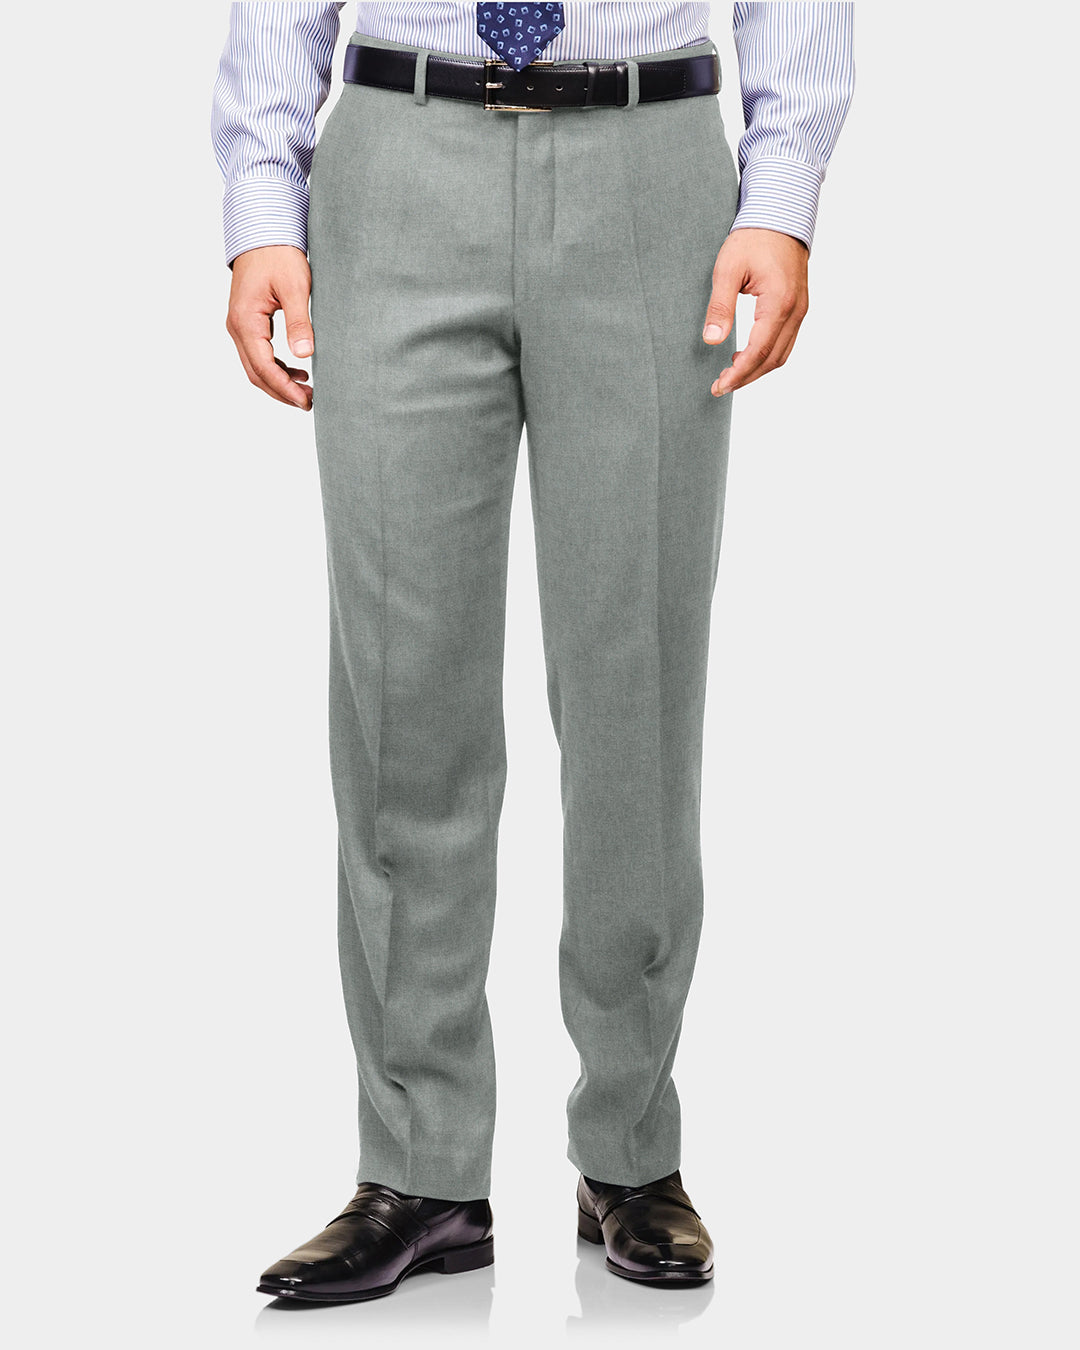 Dugdale Flannel: Light Grey Twill 14 Oz Suit